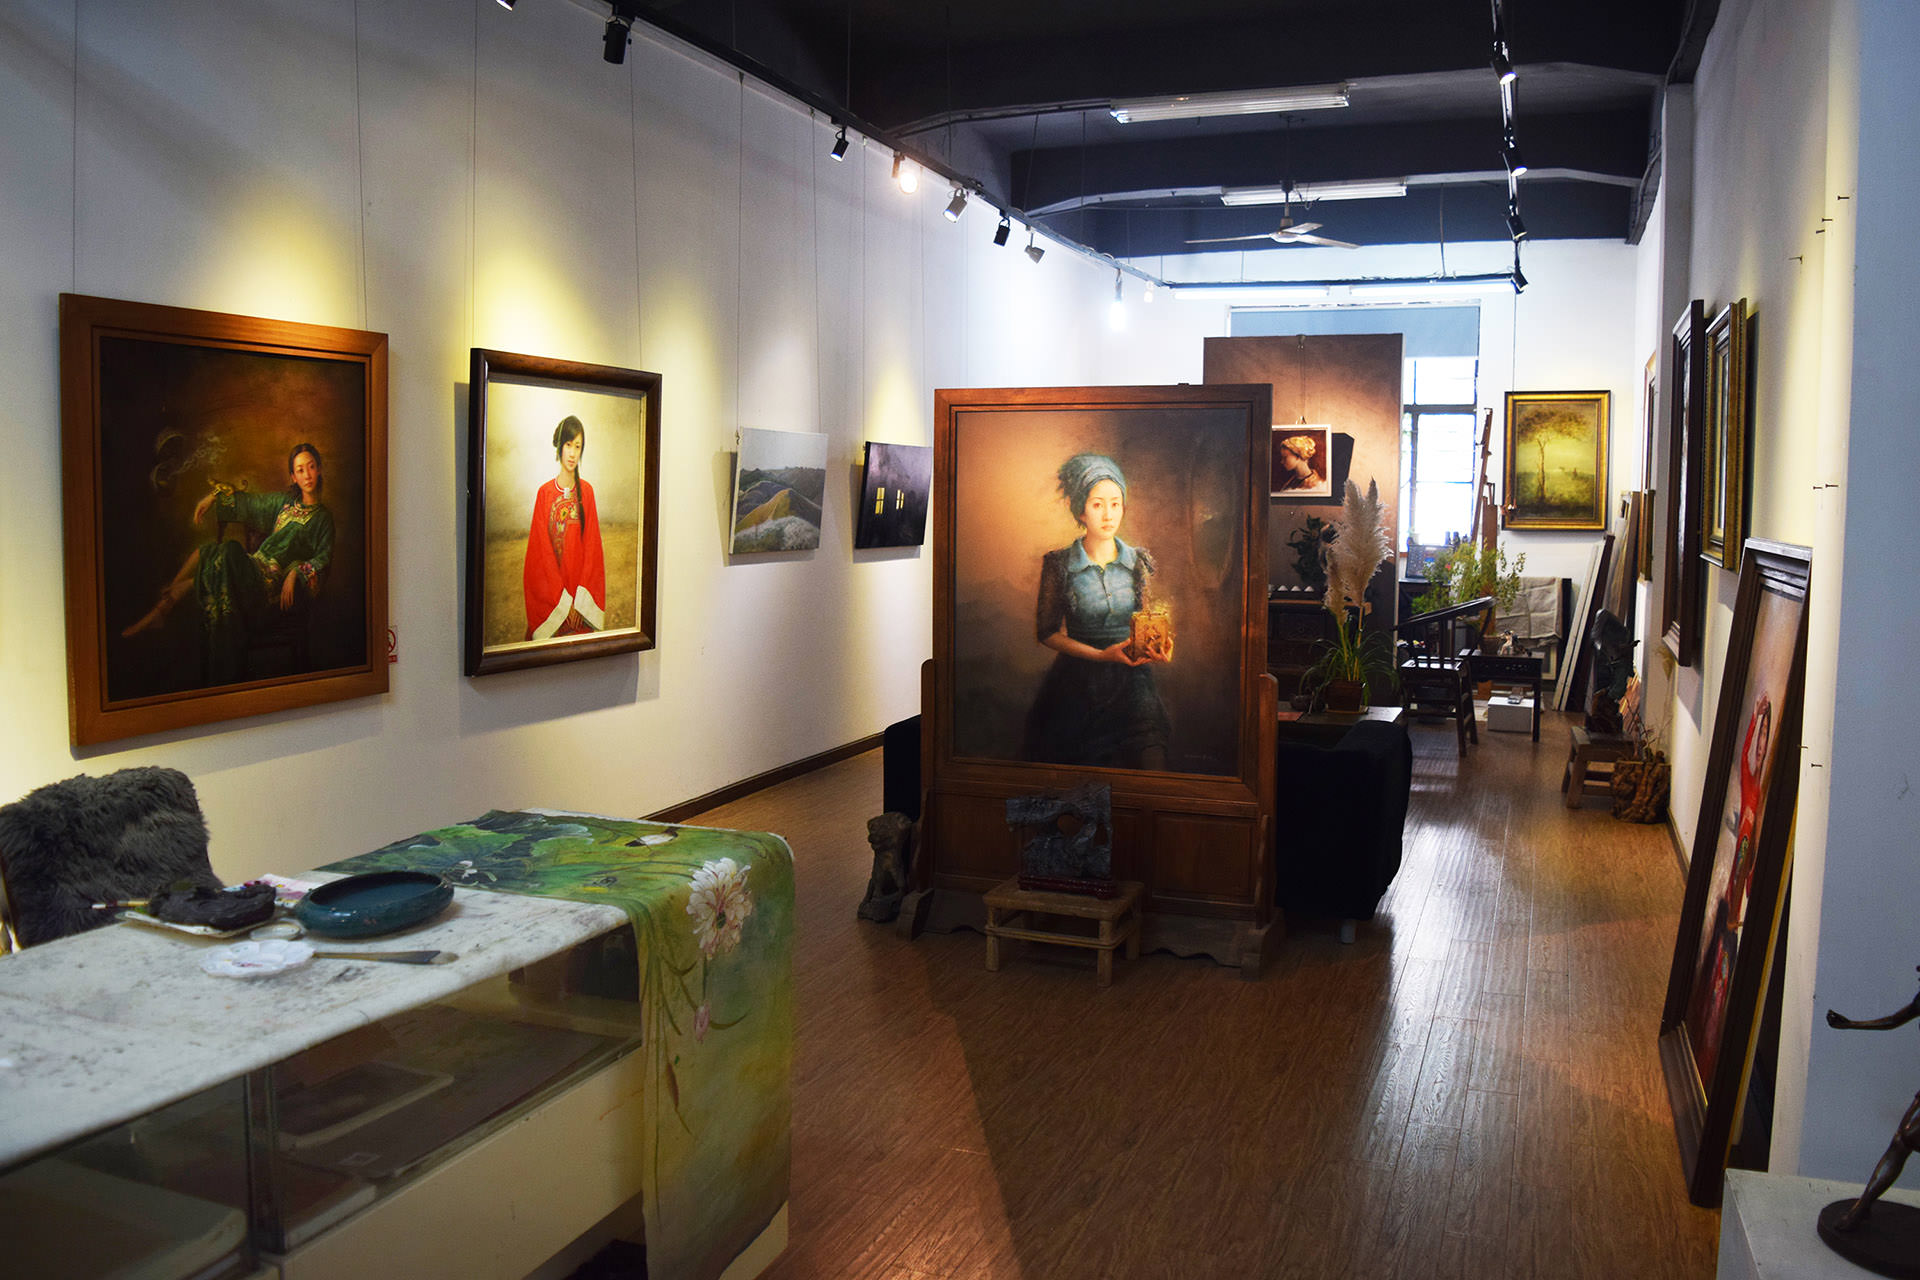 M50. גלריות בהן יושבים האמנים ויוצרים (צילום: טל ניצן)